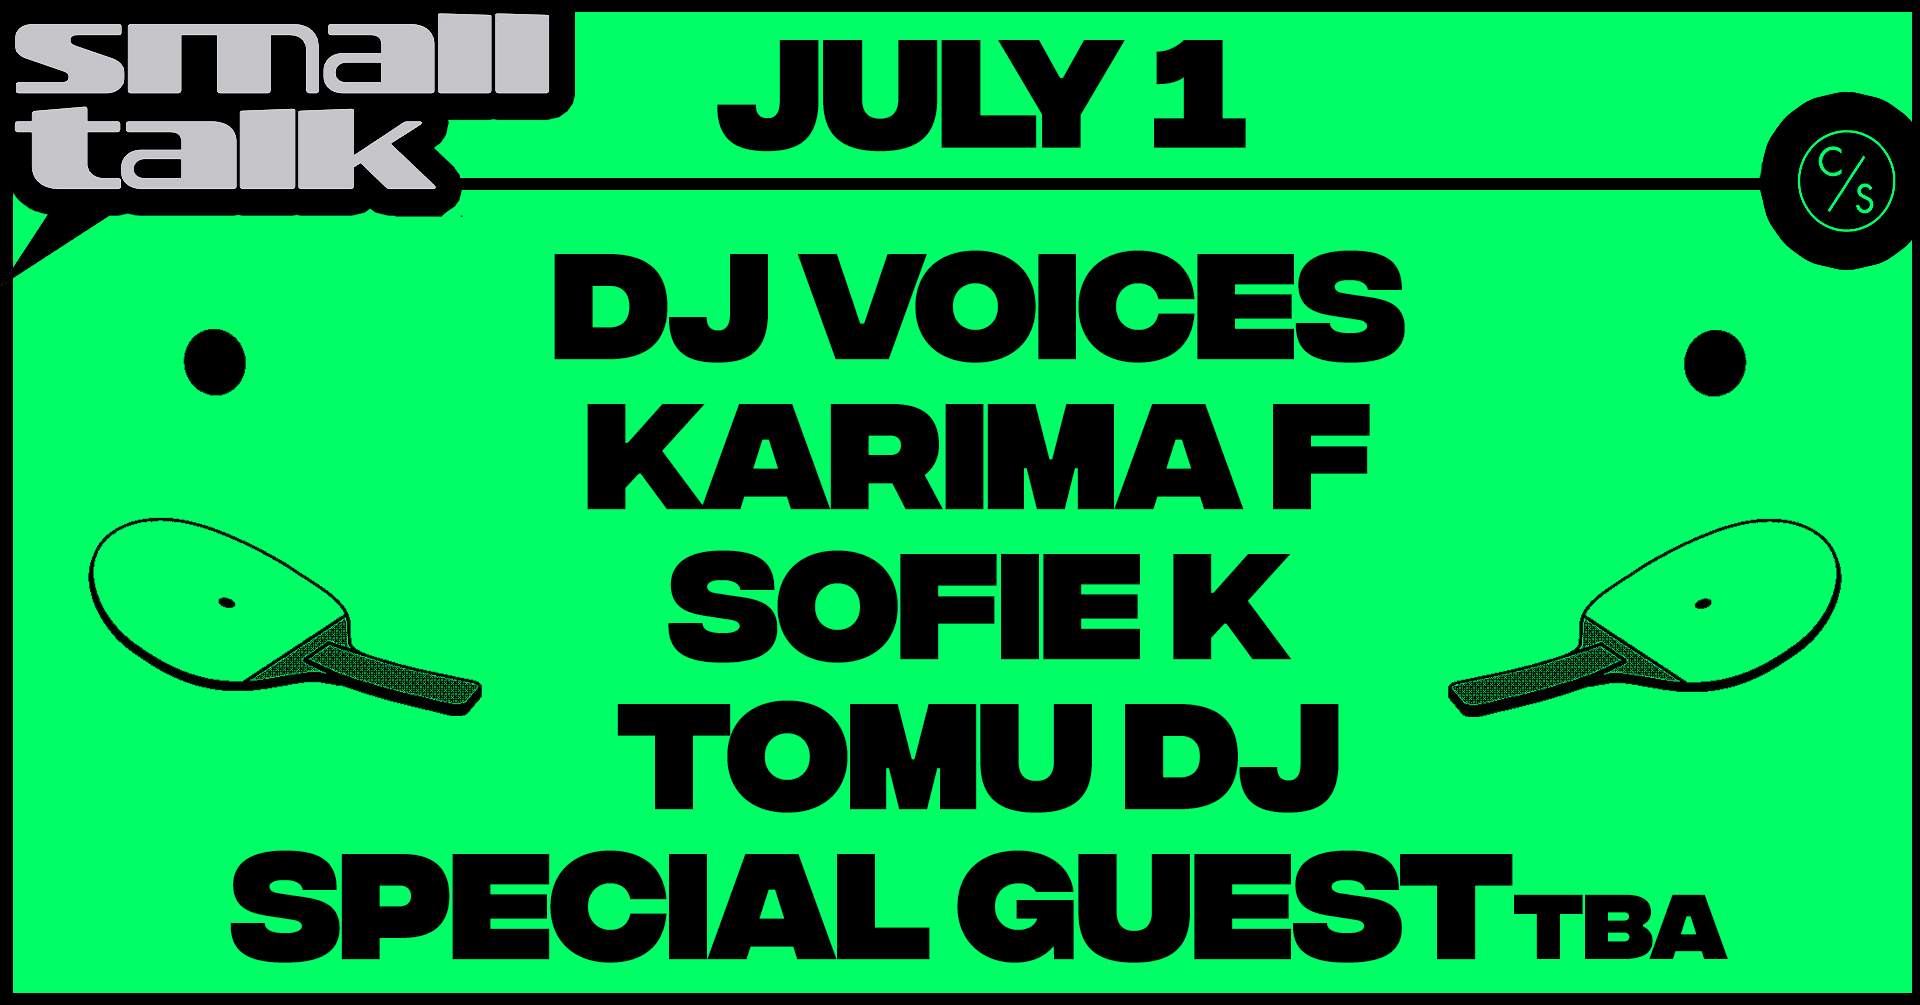 Small Talk with DJ Voices, Tomu DJ, Sofie K & Karima F - Página frontal